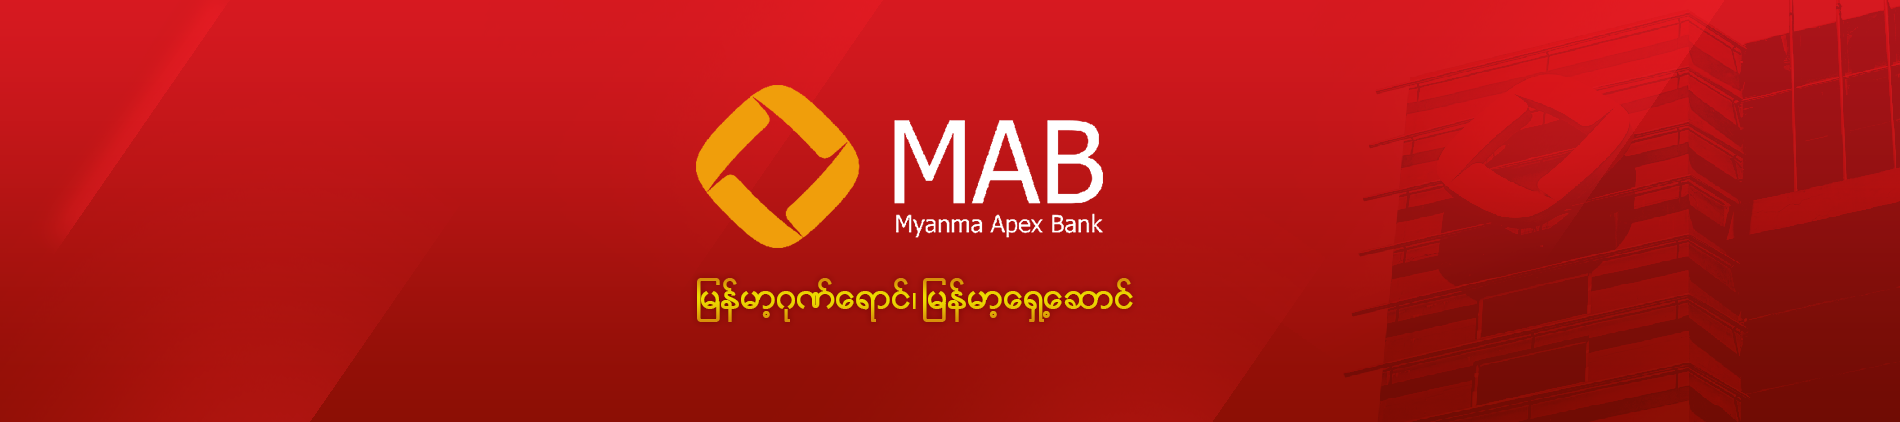 Savings Personal Business International Mobile Banking By Mab